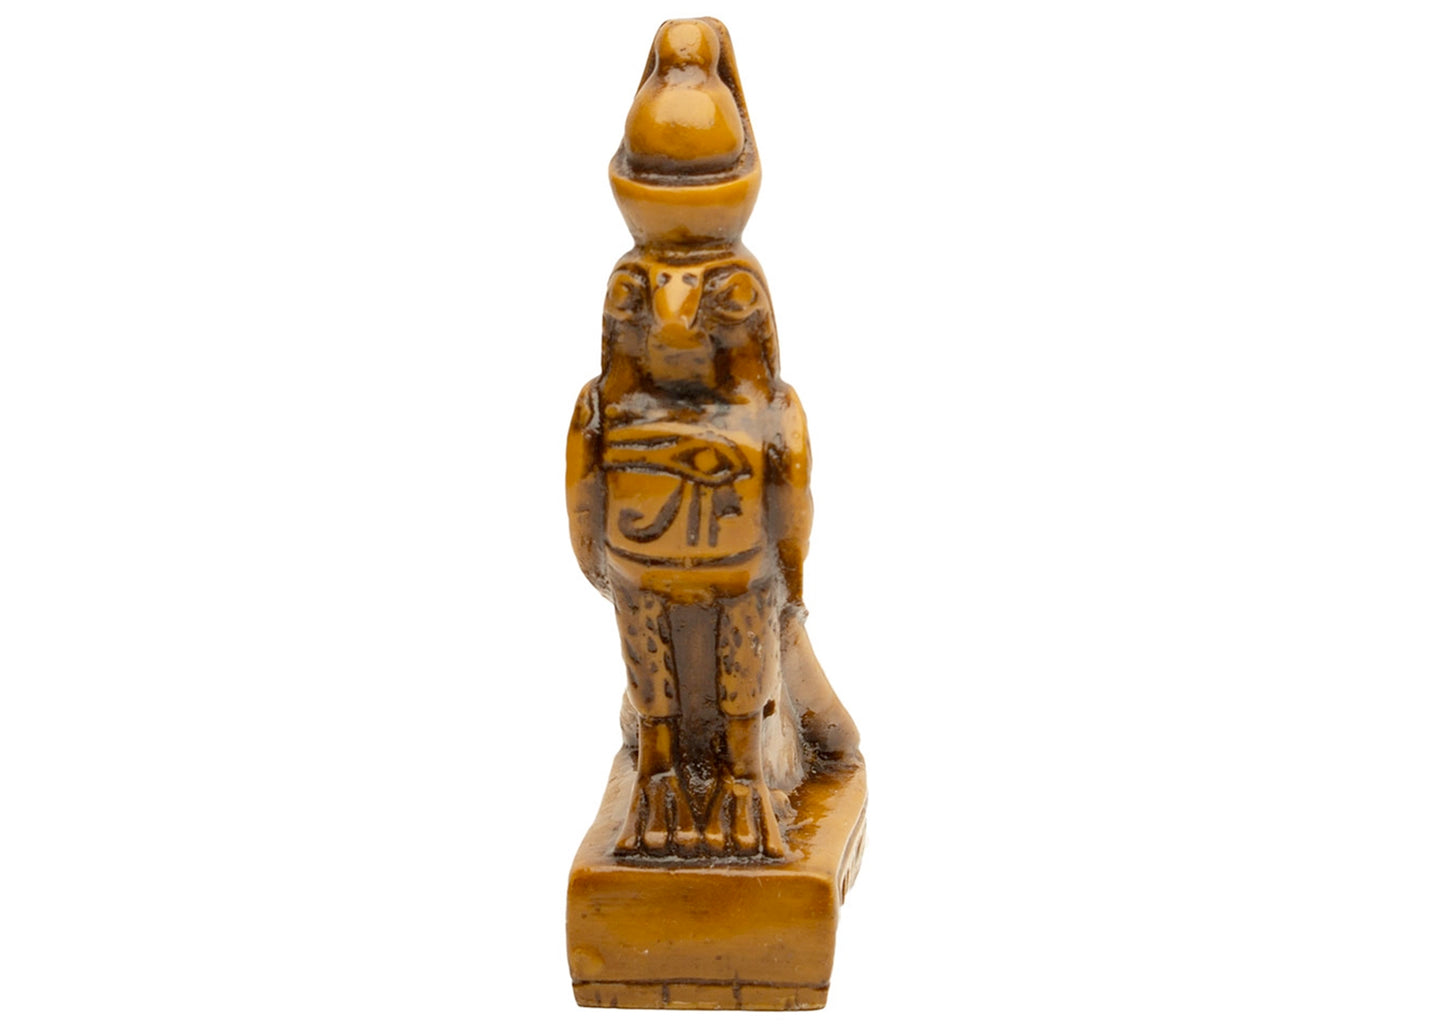 Horus Statuette in Brown